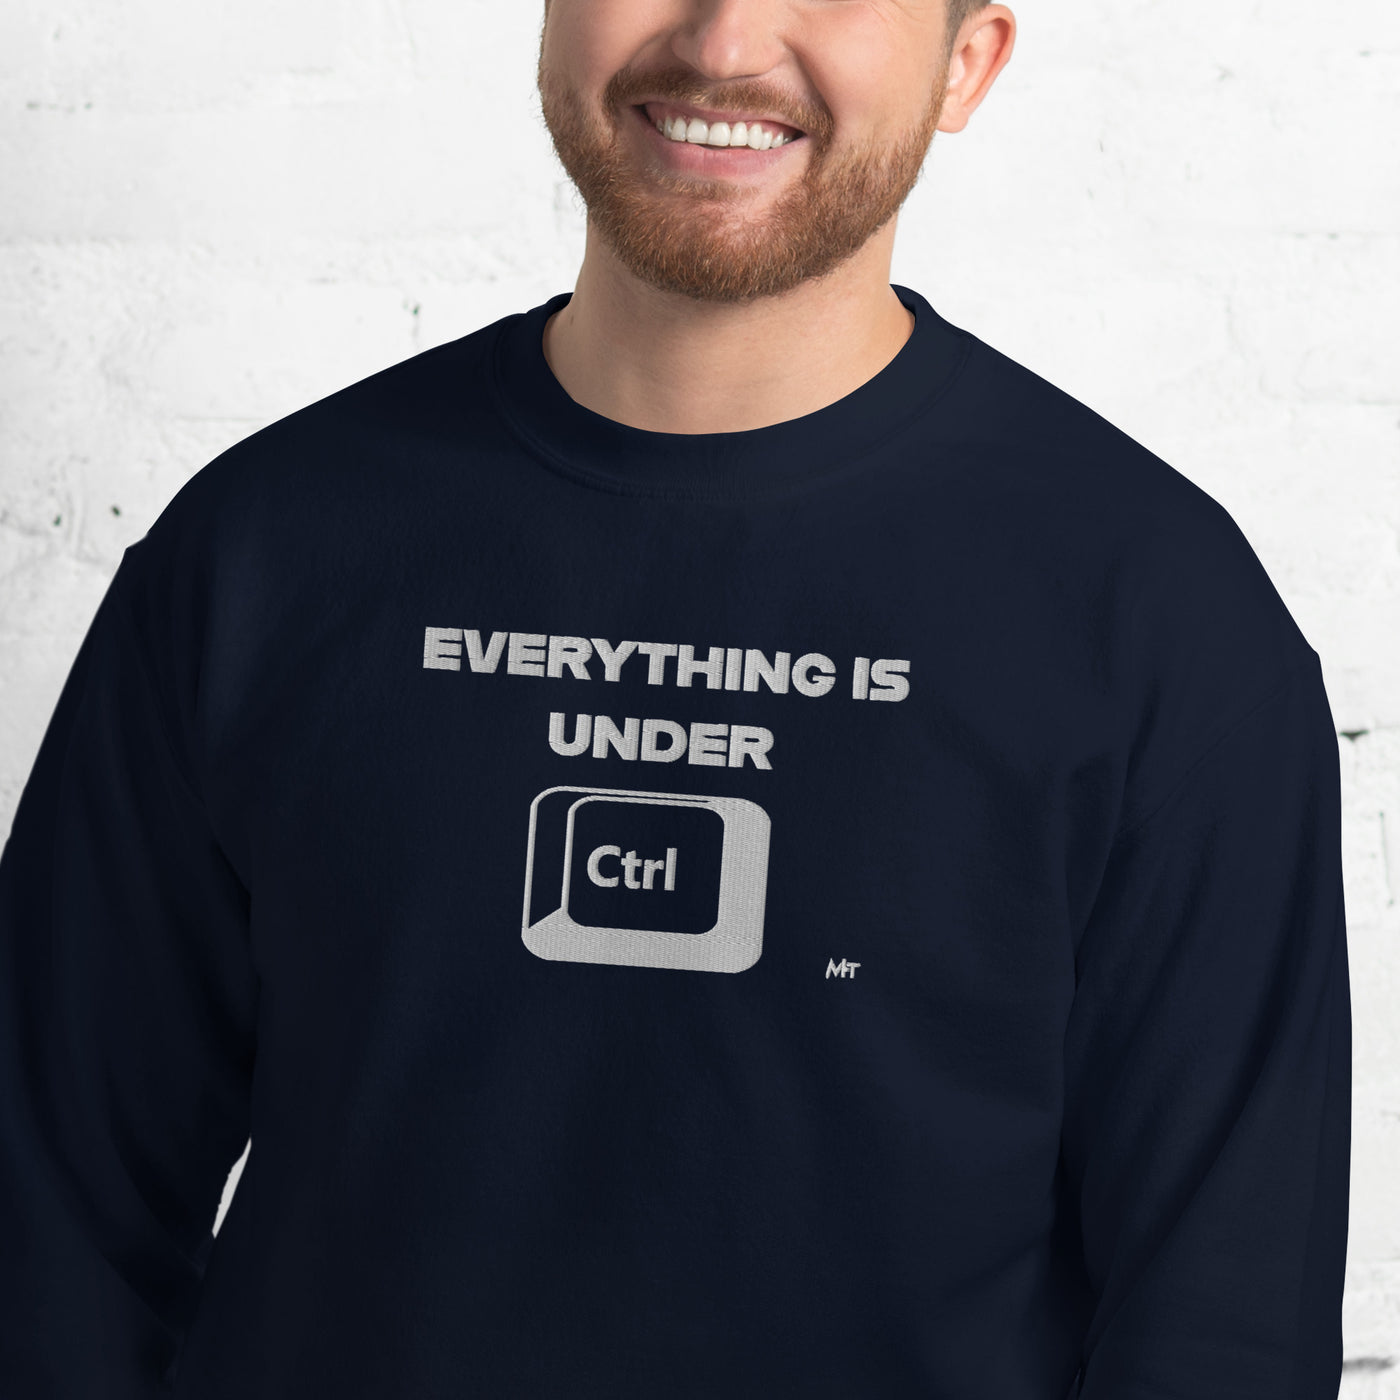 Everything is under Ctrl - Unisex Sweatshirt (embroidery)